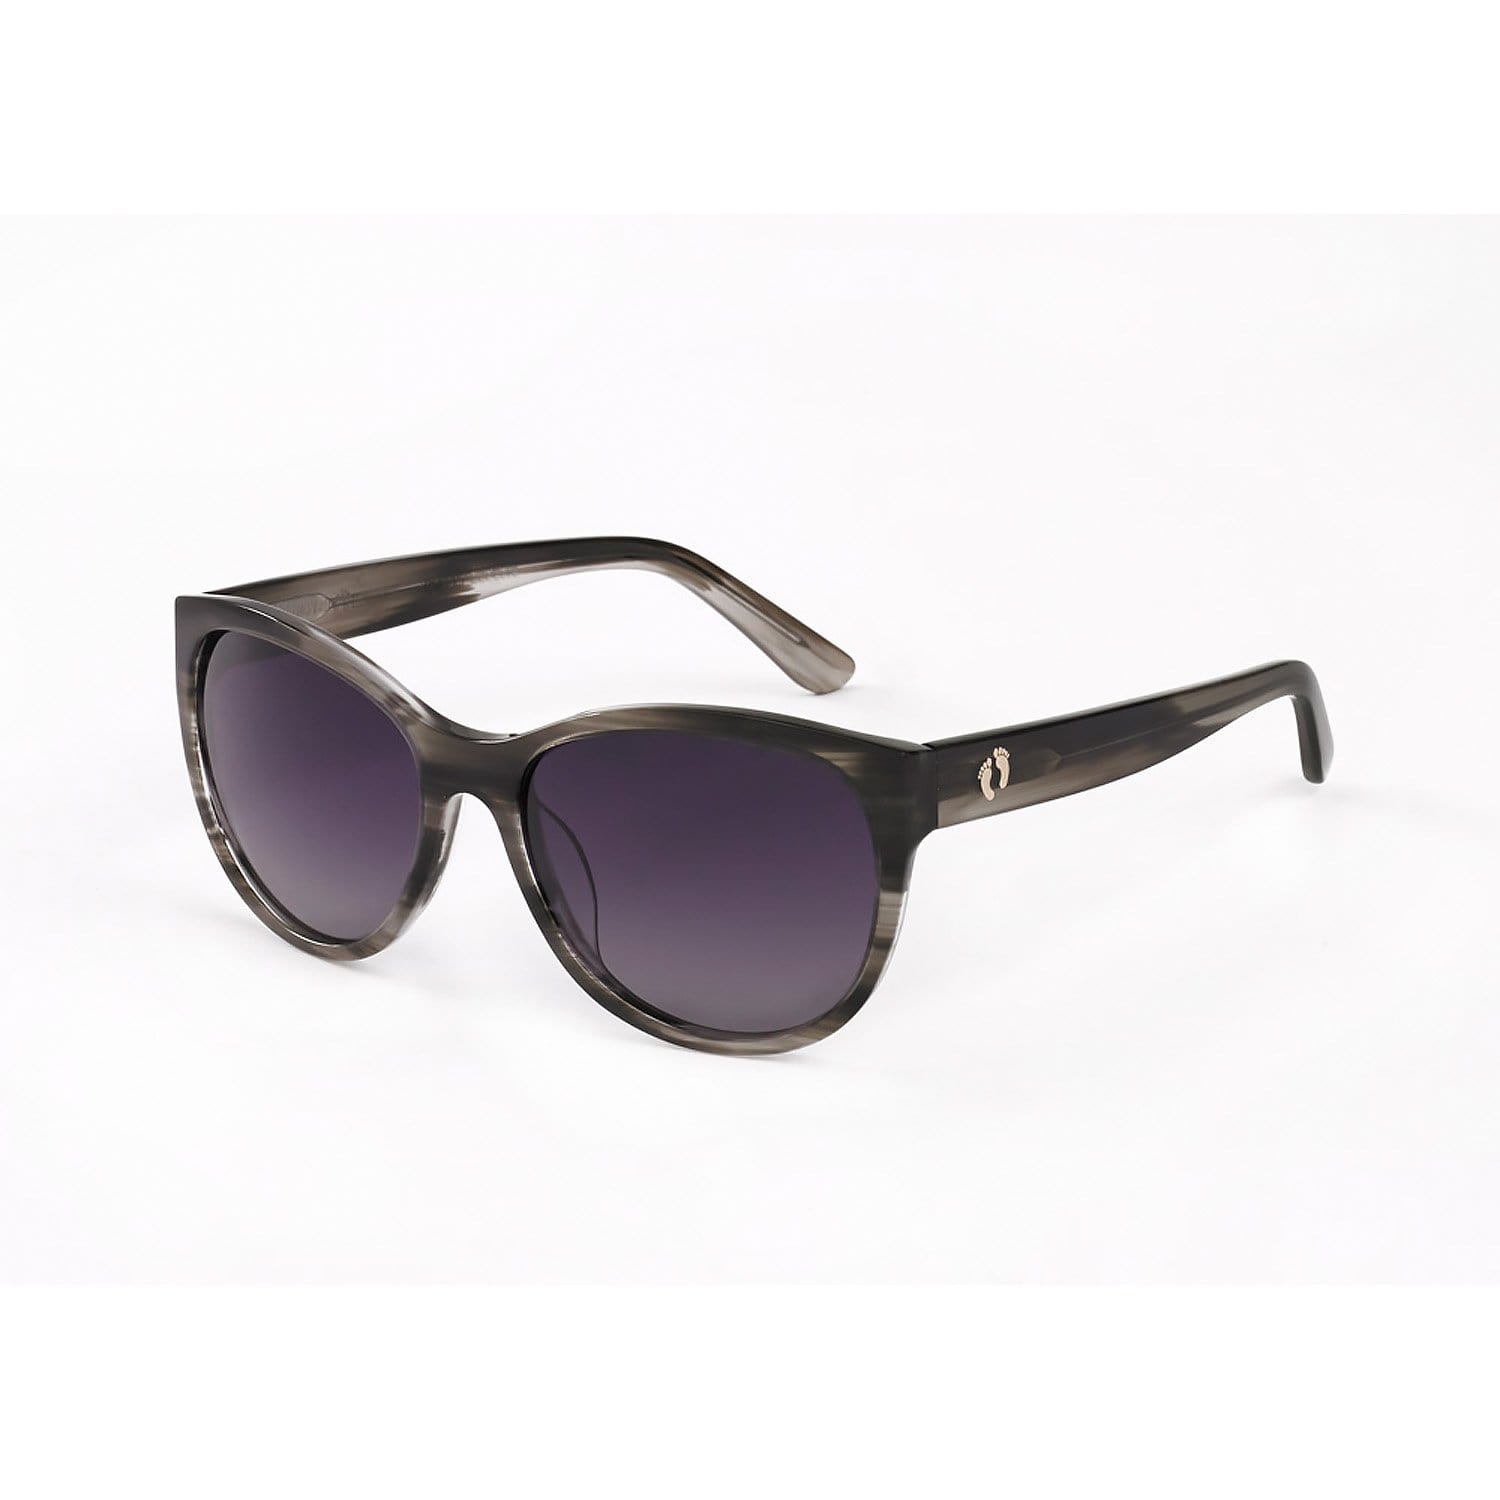 Hang Ten Gold Apparel : Eyewear - Sunglasses Hang Ten Gold The Pier Couture-Grey Horn/Gradient Smoke Lens